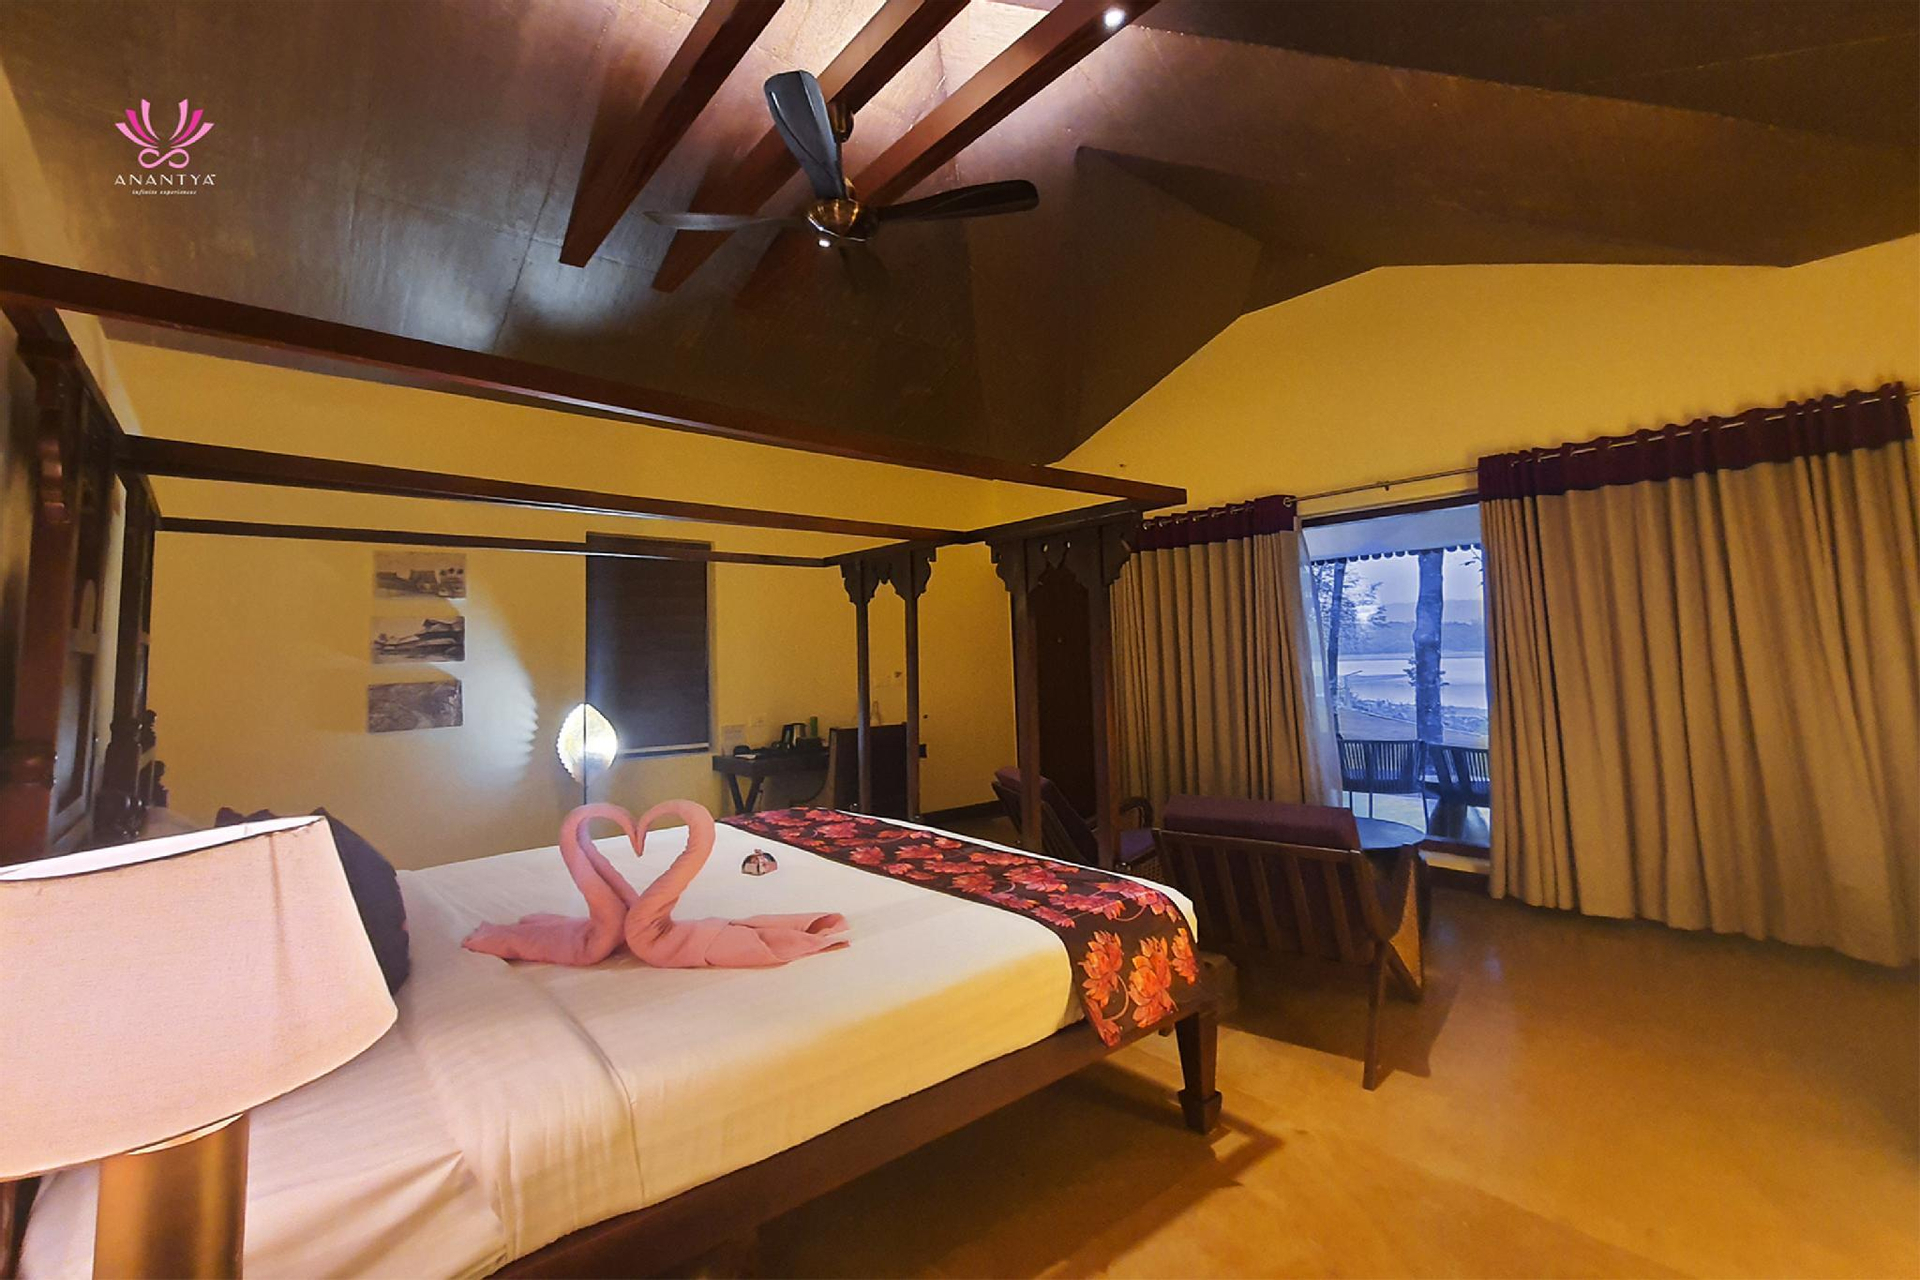 Bedroom 4, Anantya Resorts 90 minutes from Kanyakumari, Kanniyakumari